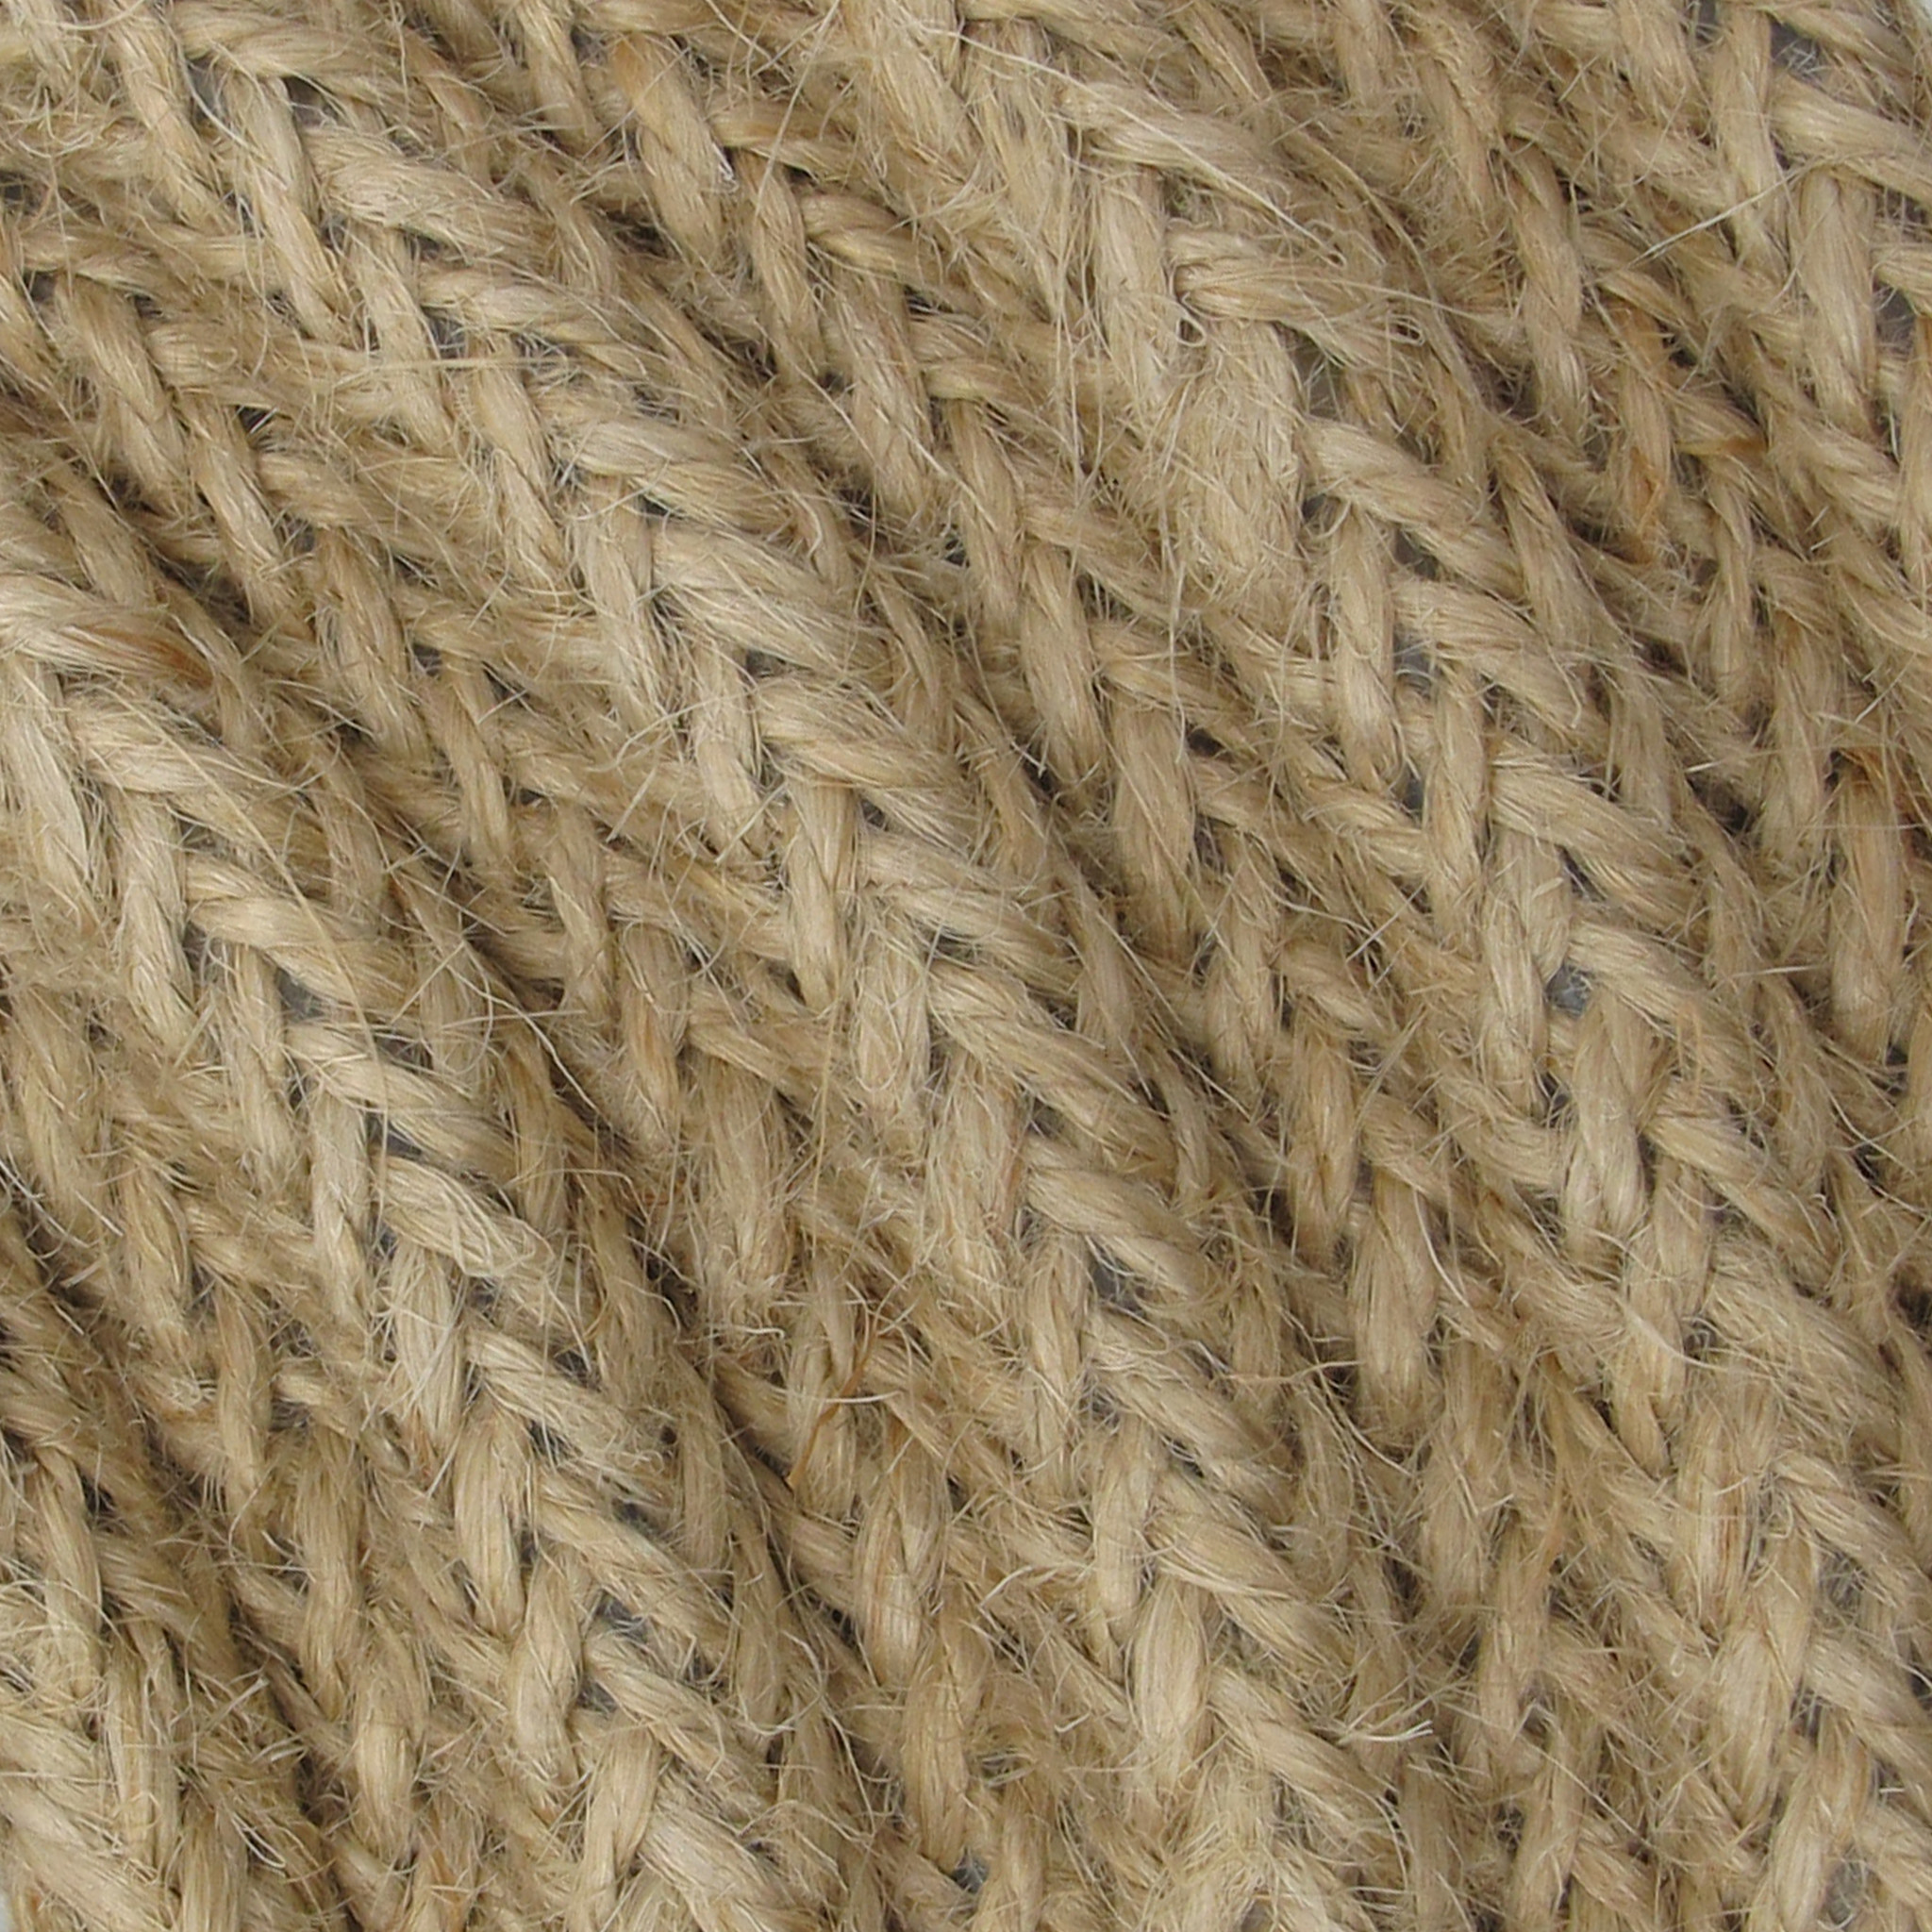 Natural Hemp Rope Hemp Fiber Woven Into A Thick Thread Closeup